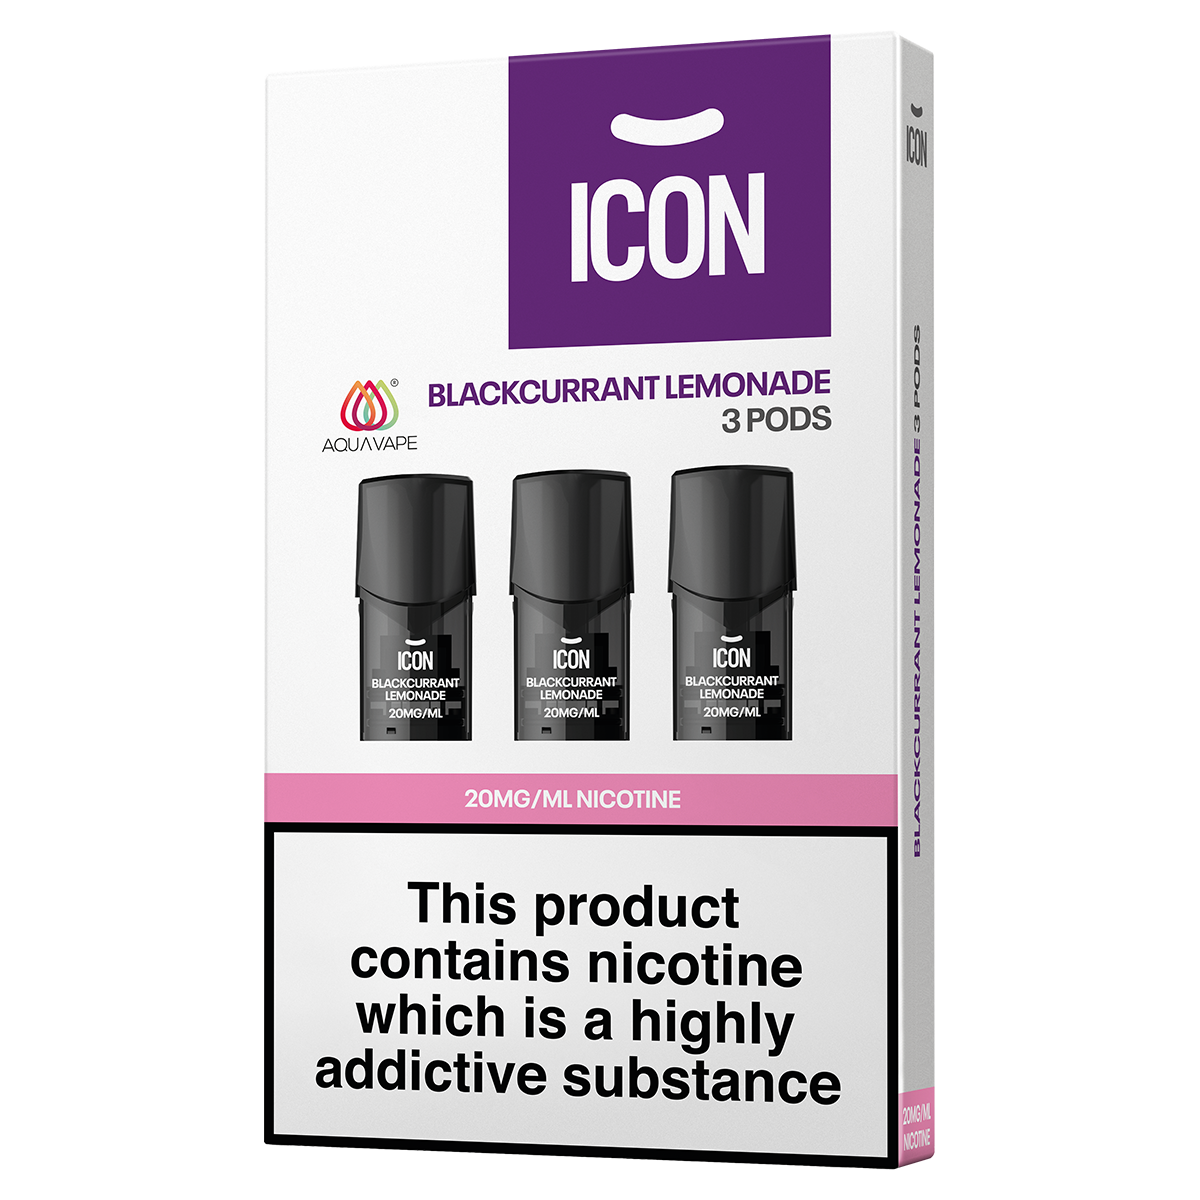 ICON Aqua Vape Blackcurrant Lemonade Pods (Pack of 3) 20mg